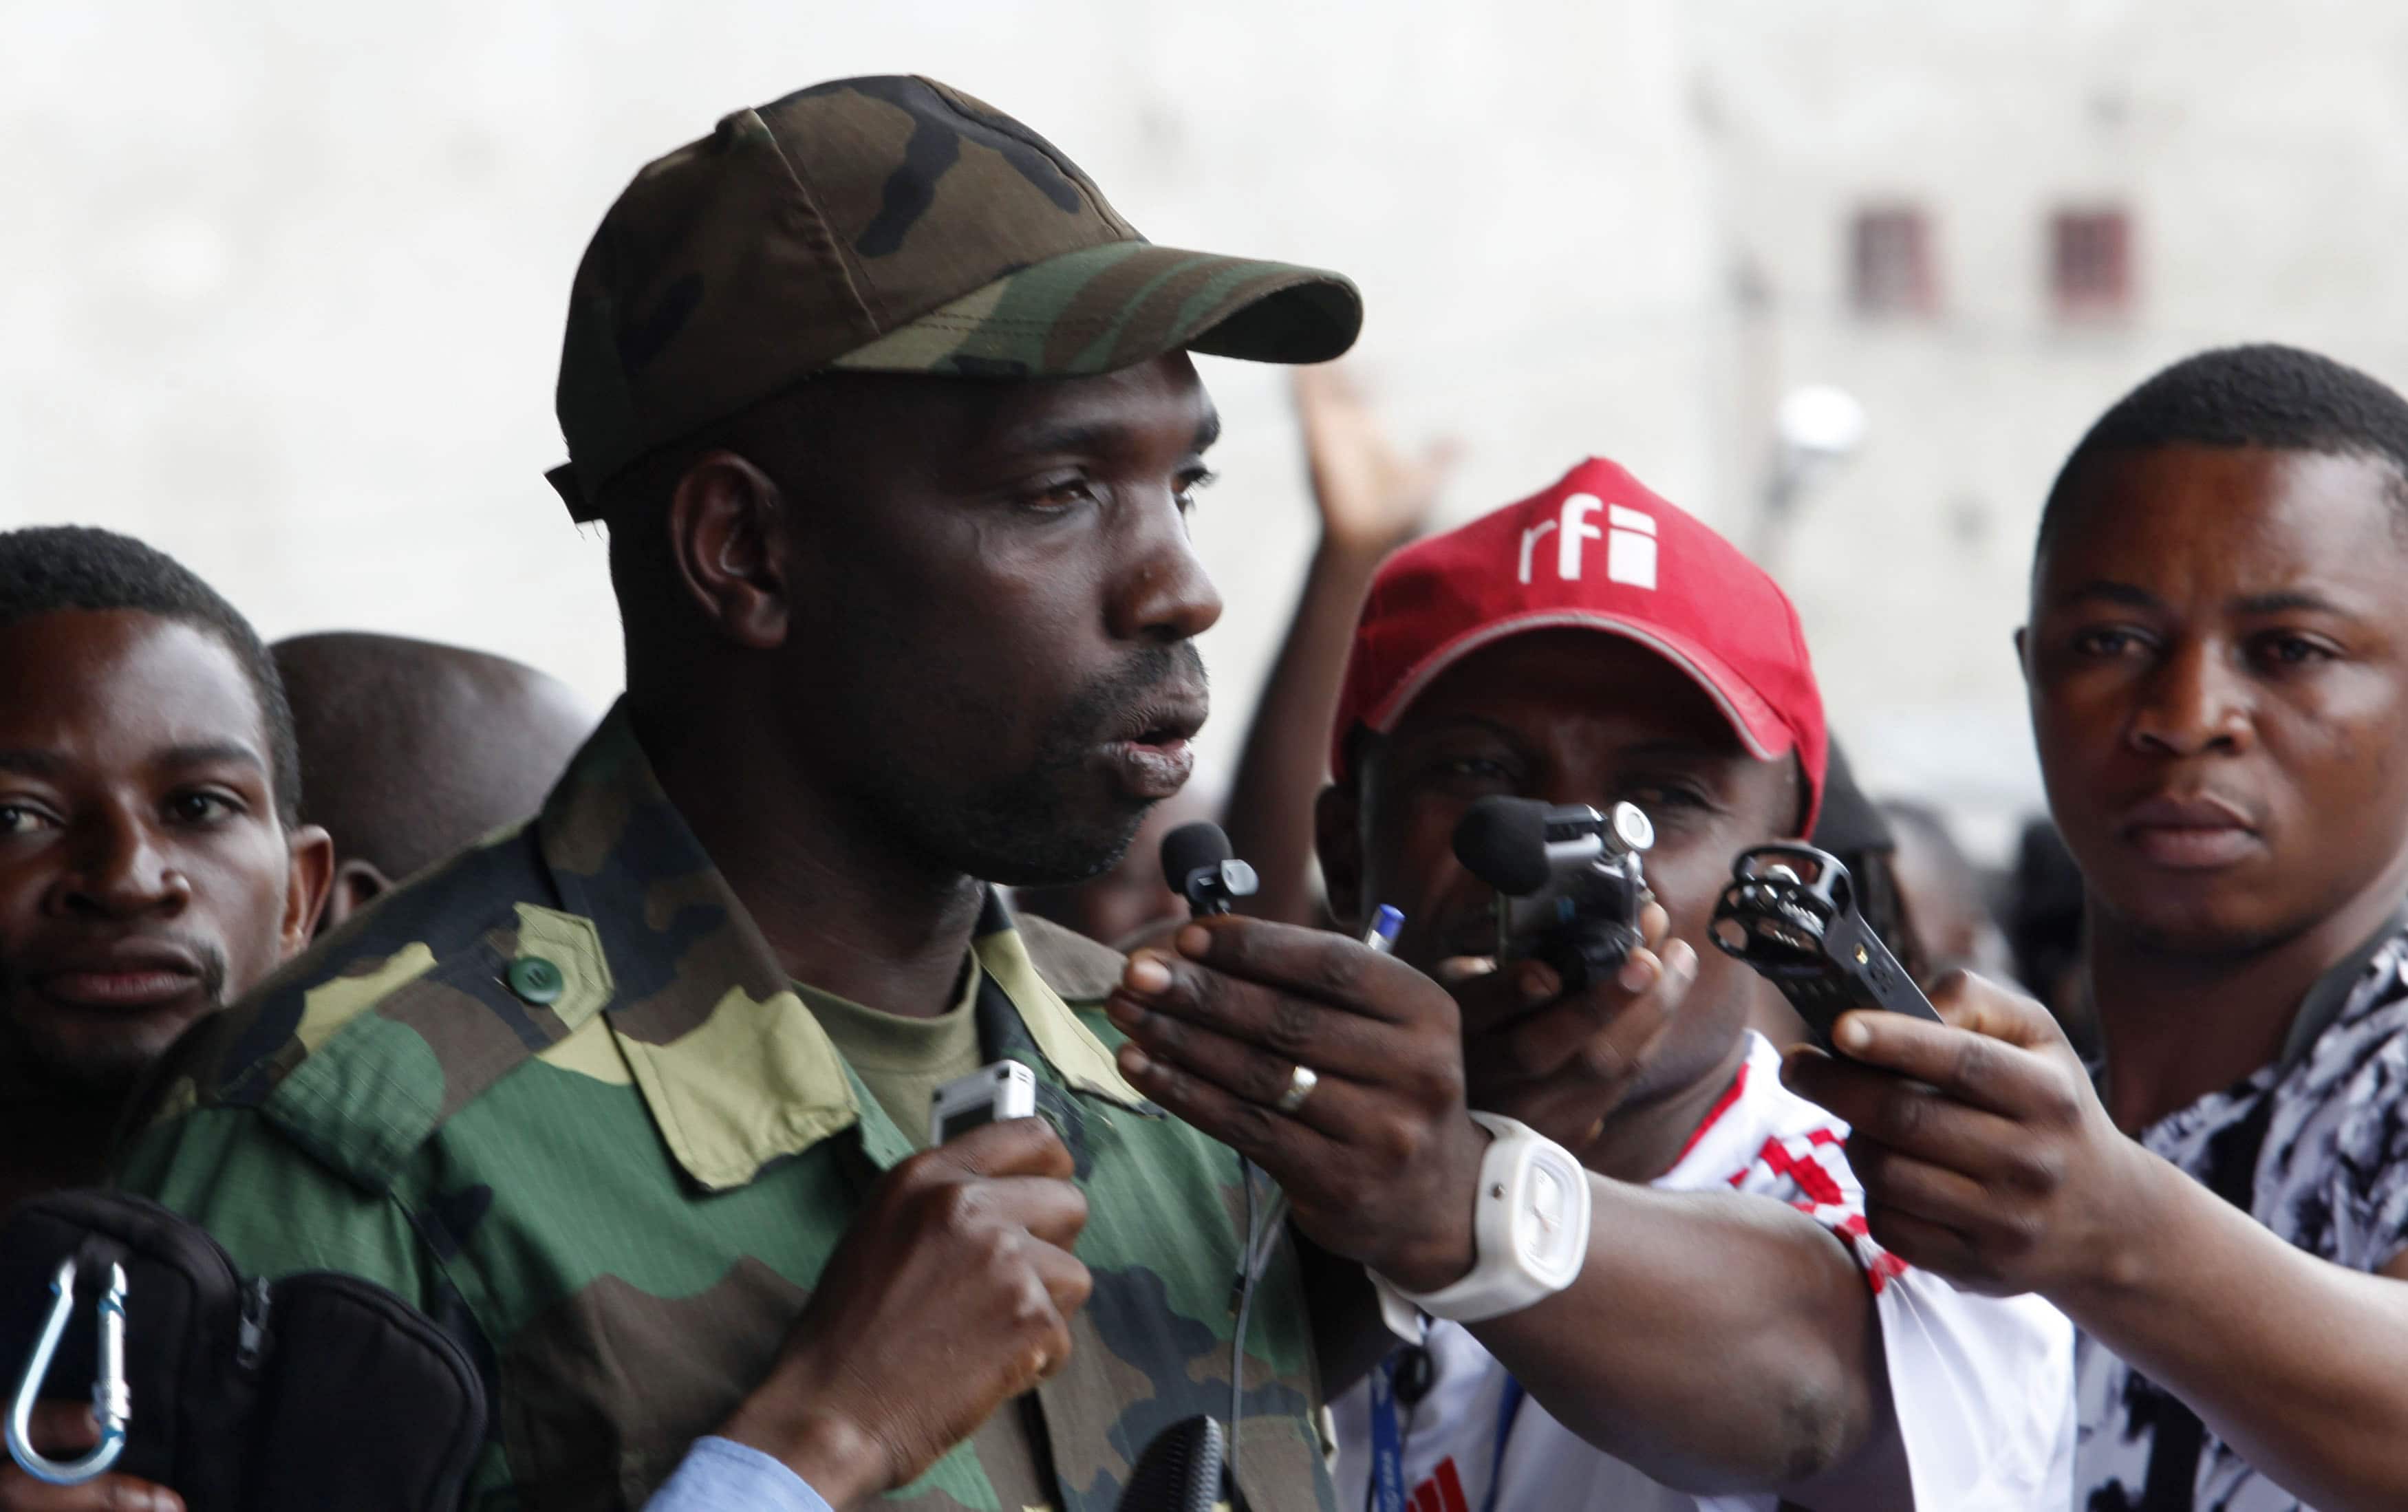 The M23 rebels spokesperson Vianney Kazarama (C) speaks to the media at a stadium in Goma, 21 November 2012., REUTERS/James Akena